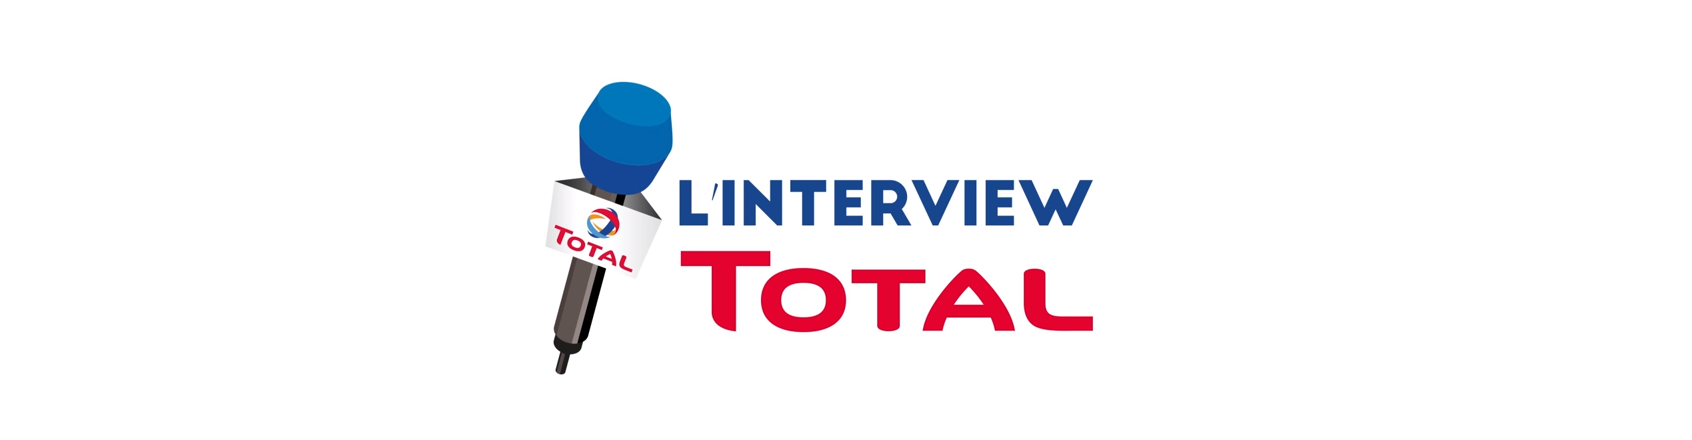 L'interview TOTAL
